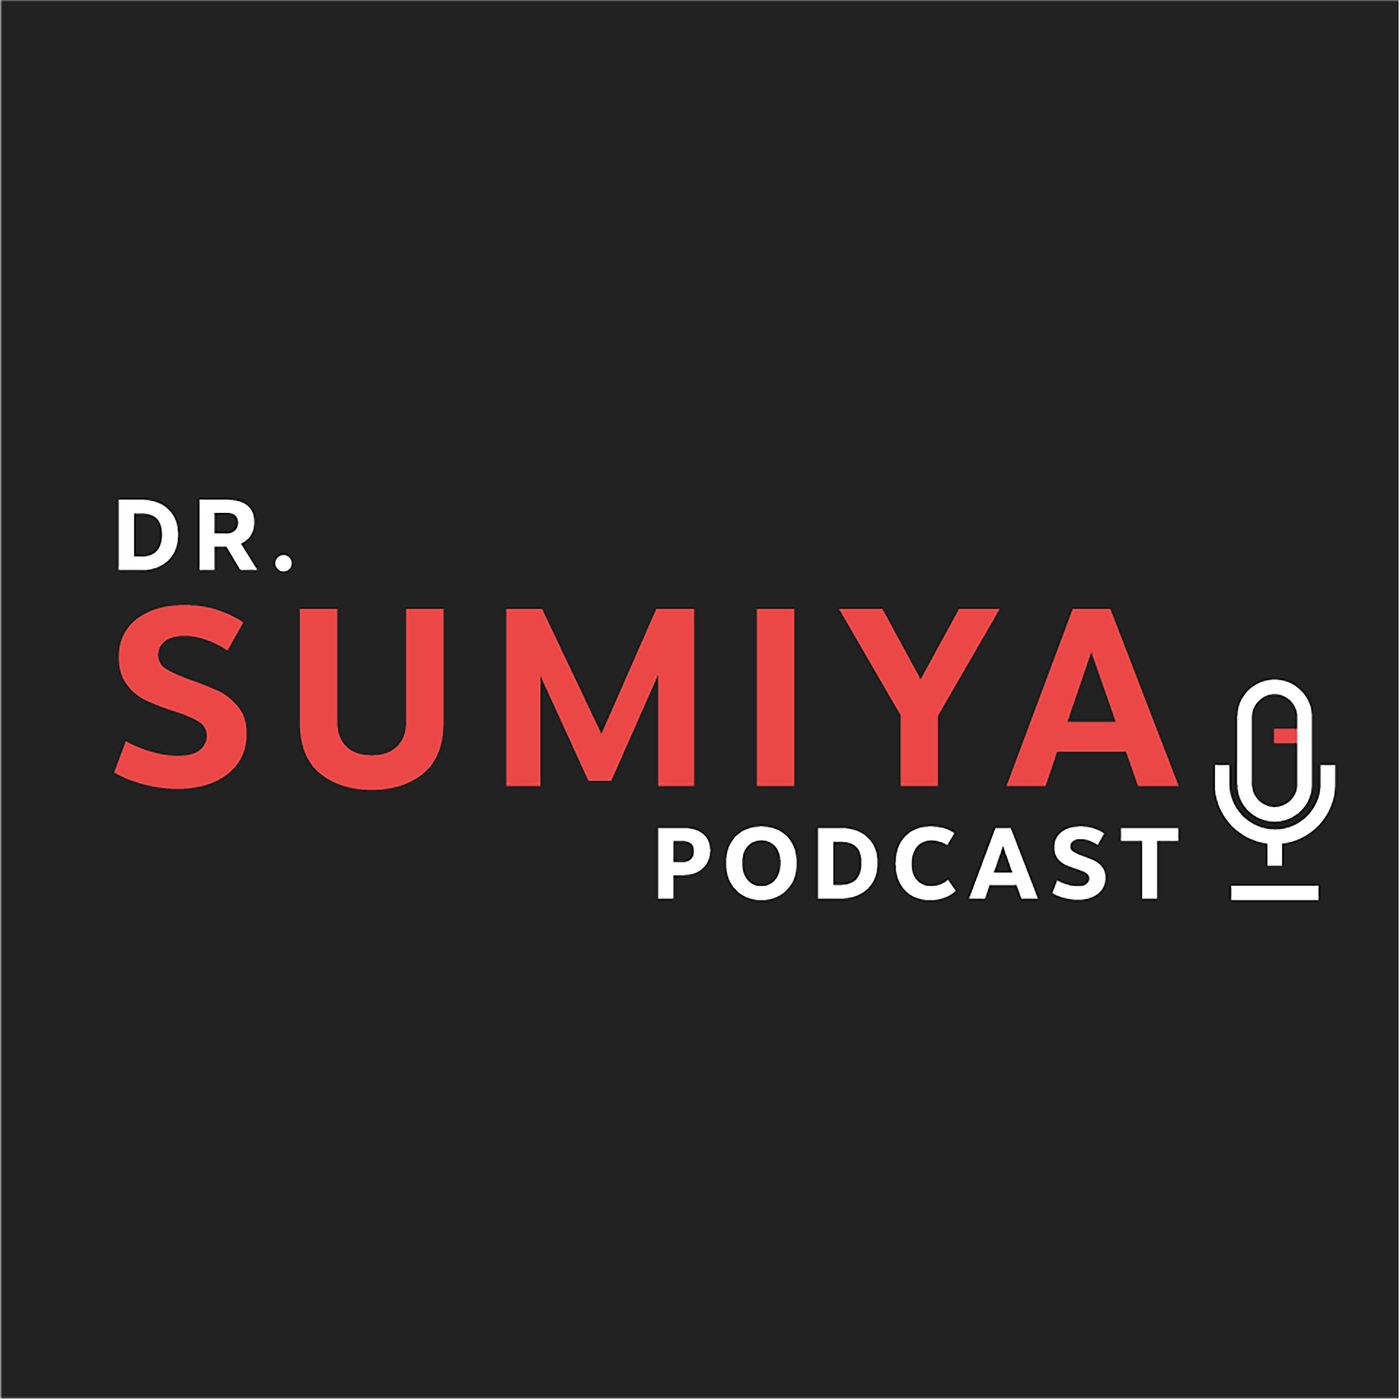 Dr. Sumiya podcast